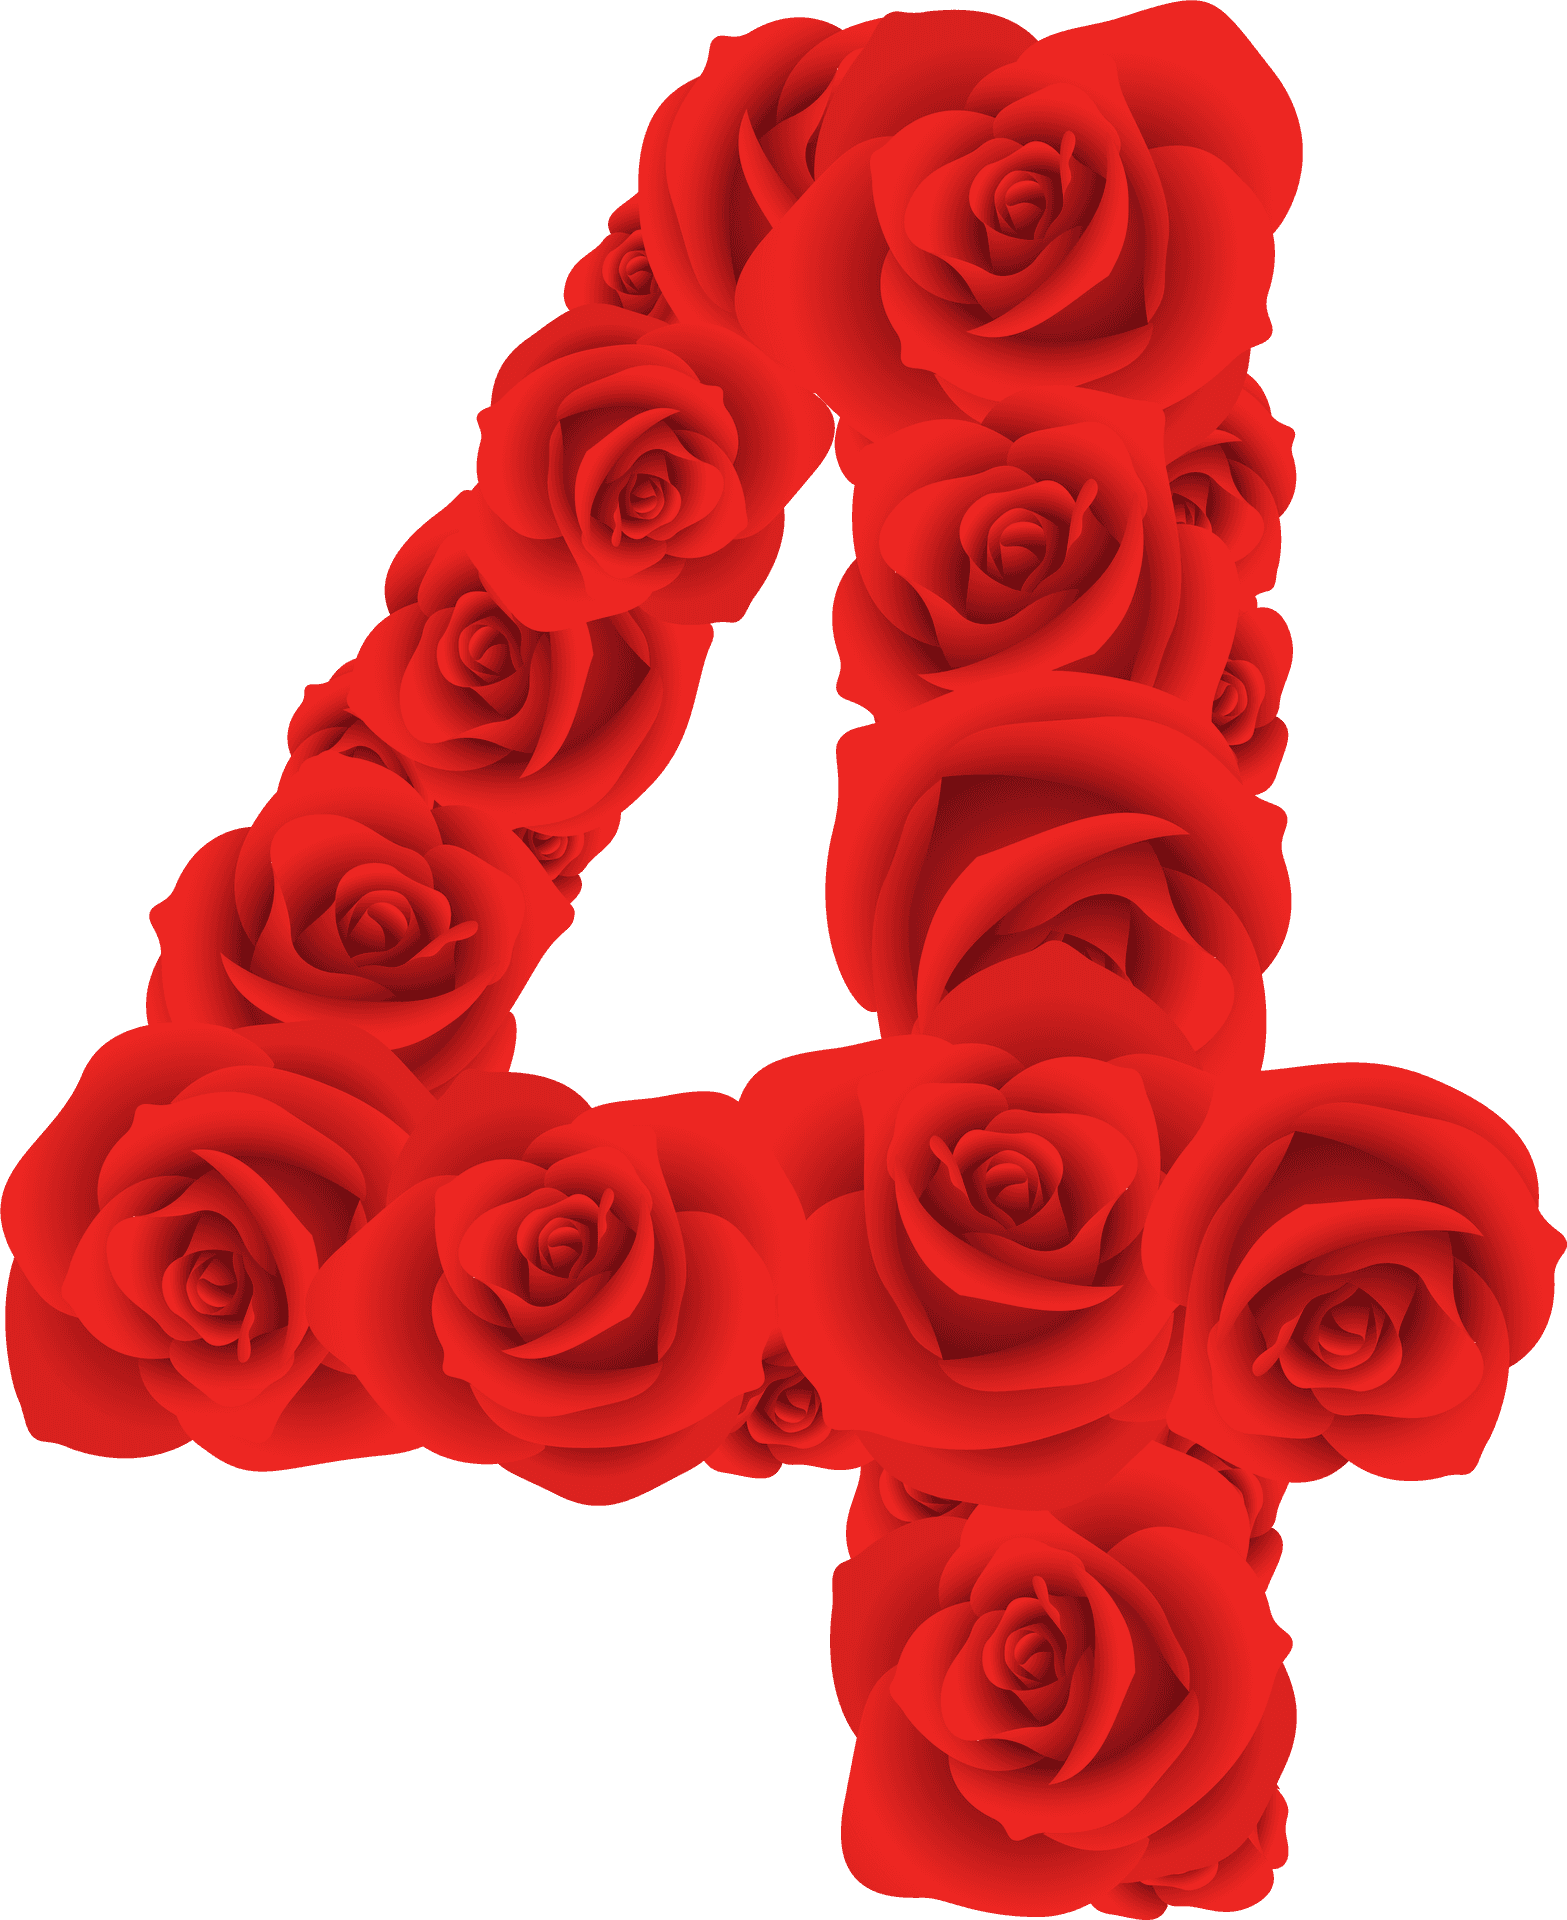 Red Rose Number Four Floral Art PNG image